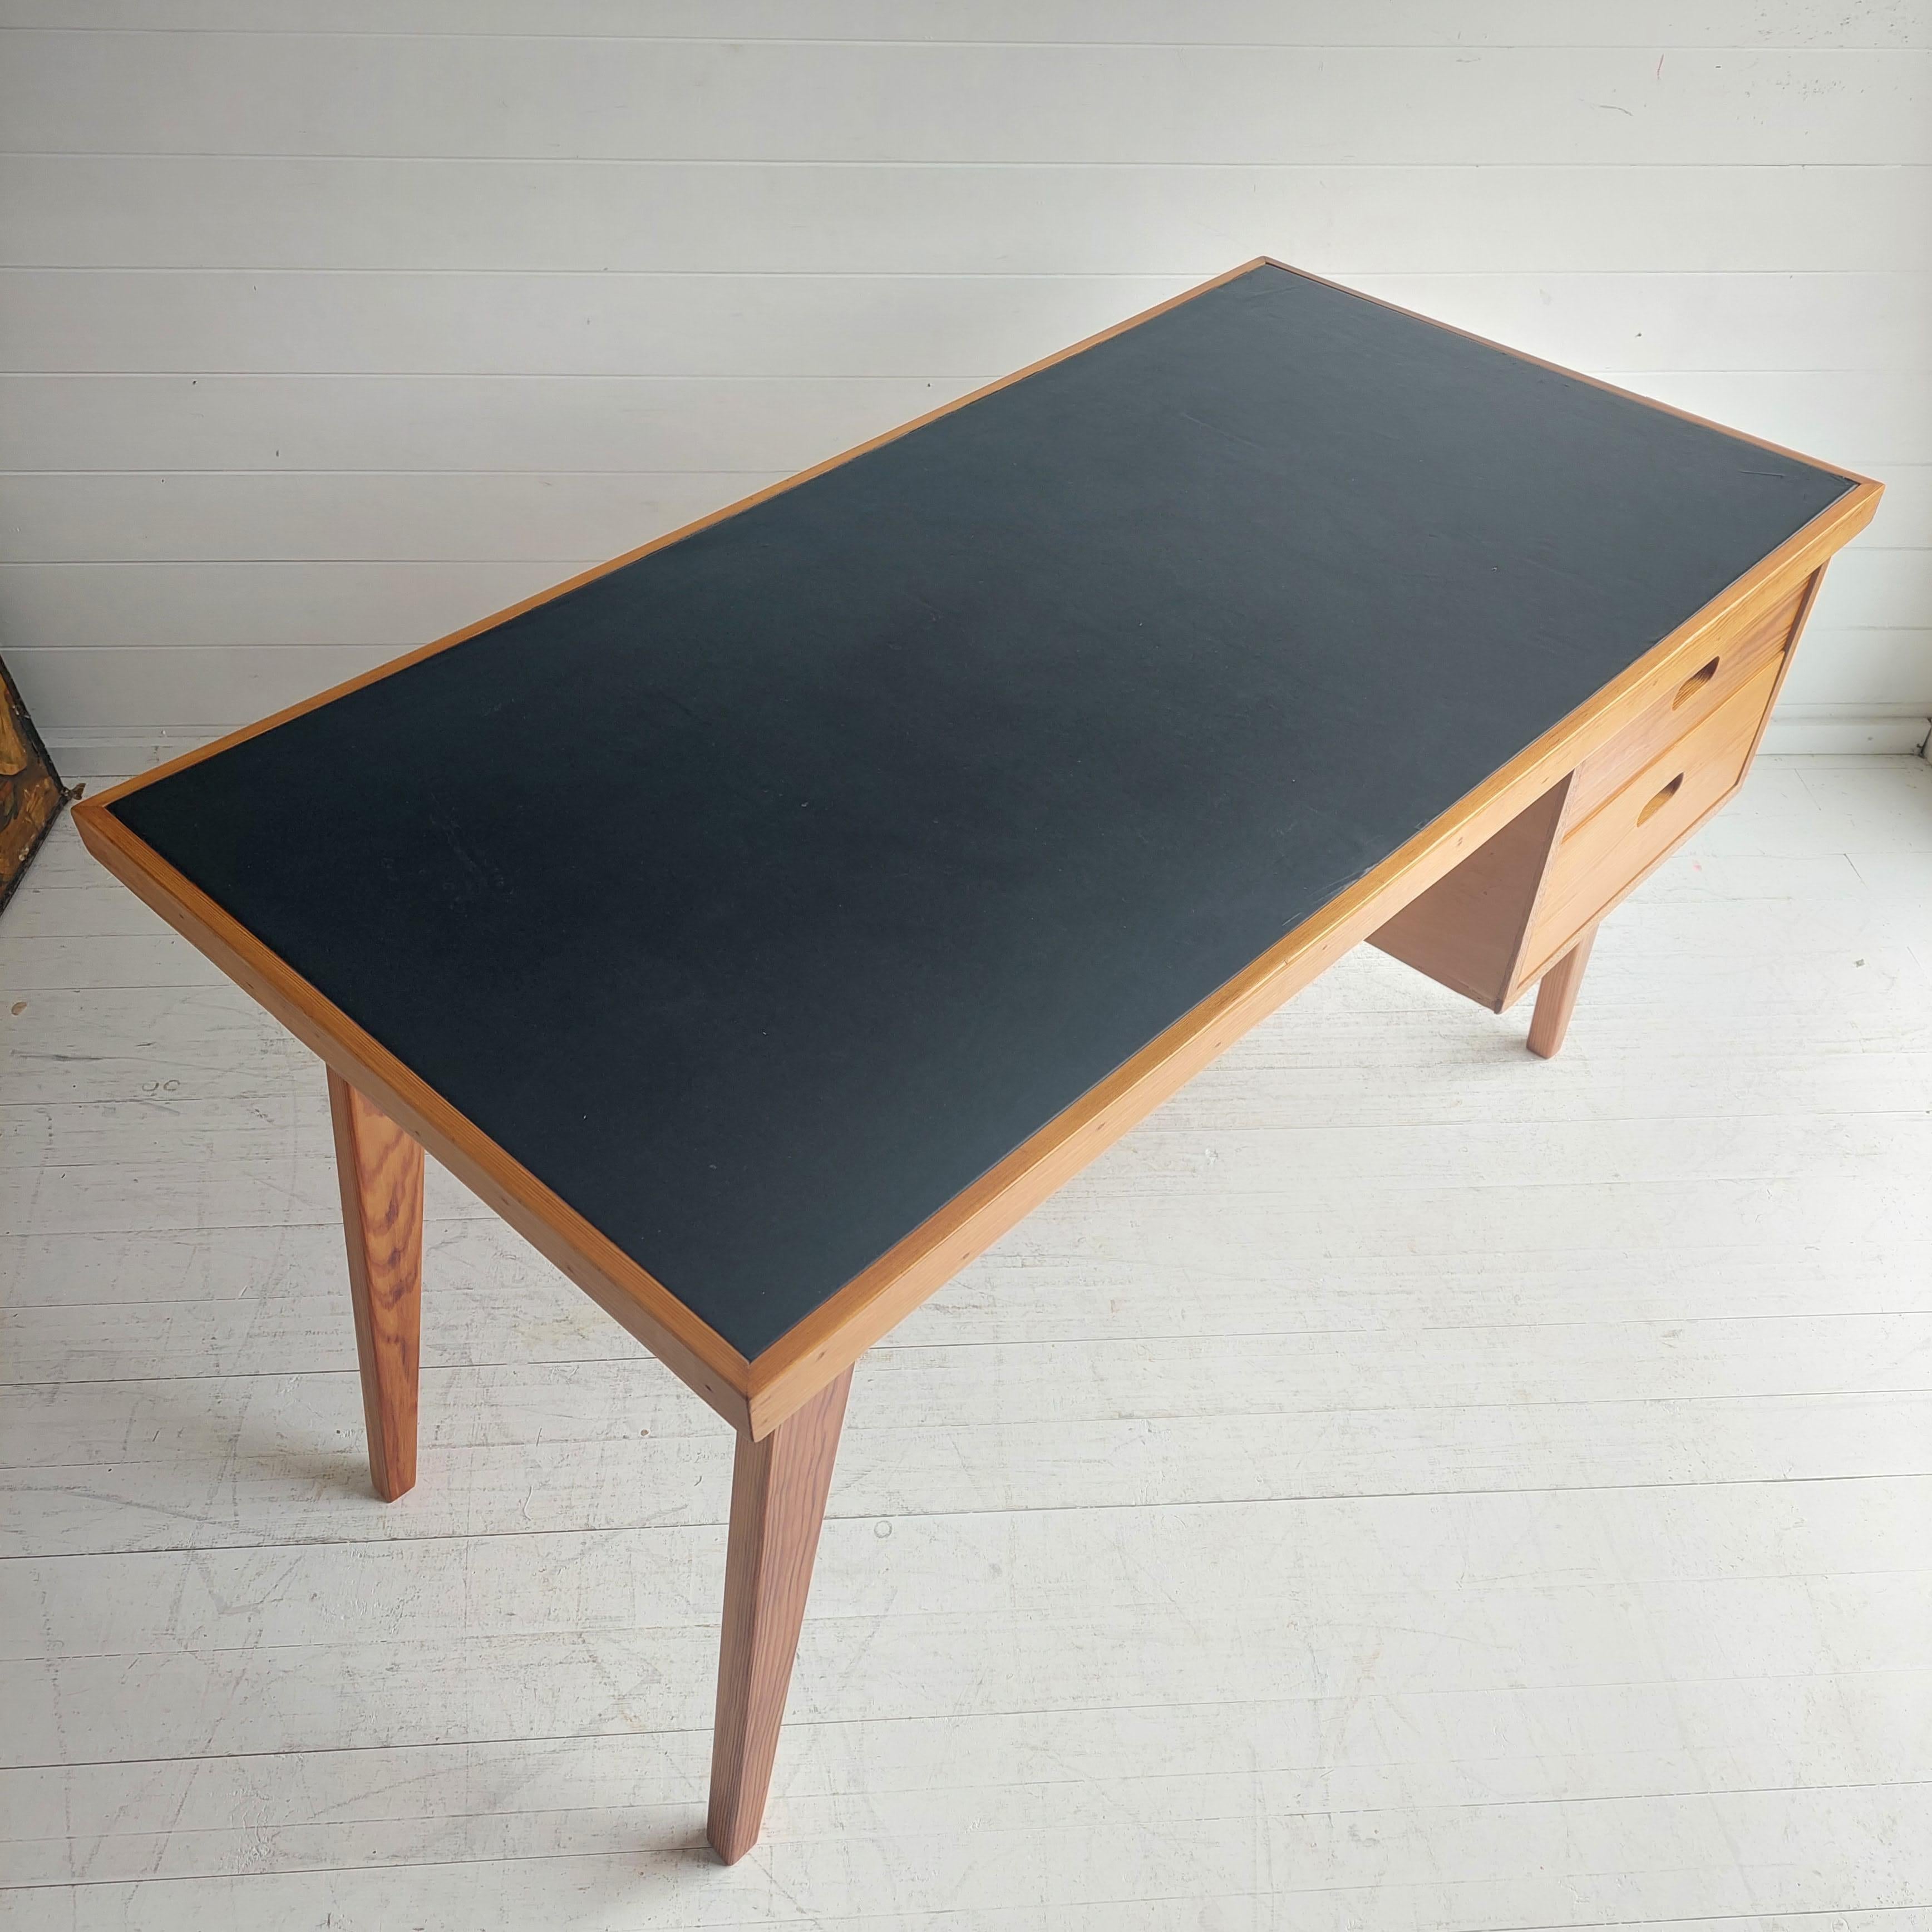 20th Century Scandinavian Single Pedestal Writing Desk in Pine, Paul McCobb style 60s